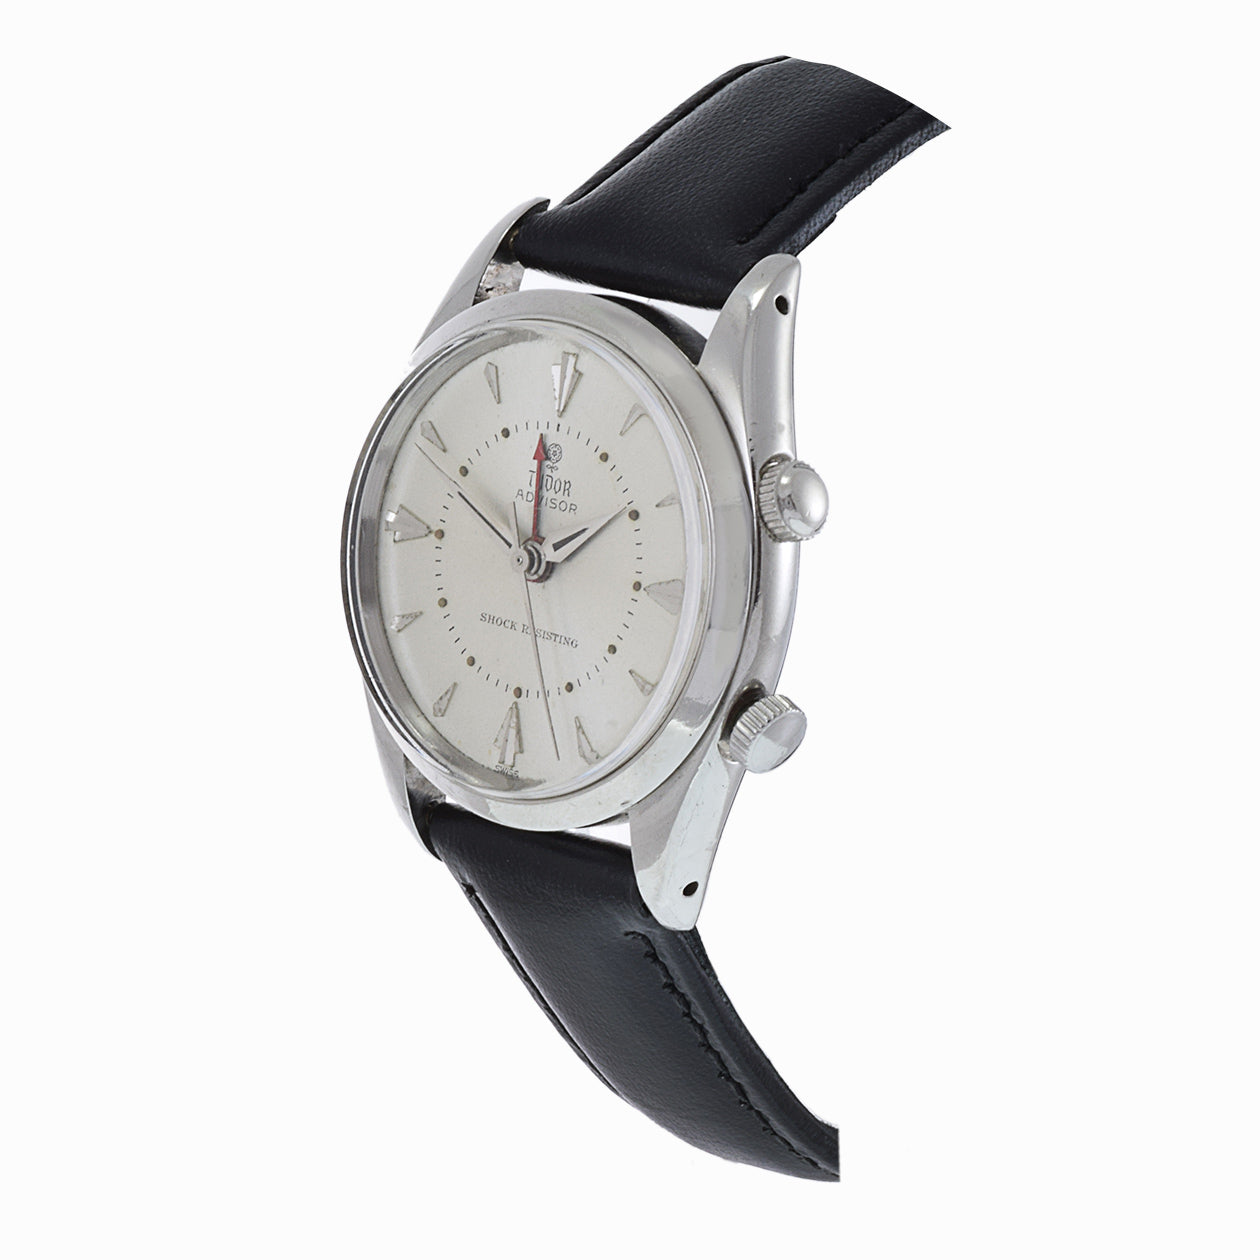 Vintage 1960's Tudor 7926 Advisor Alarm watch